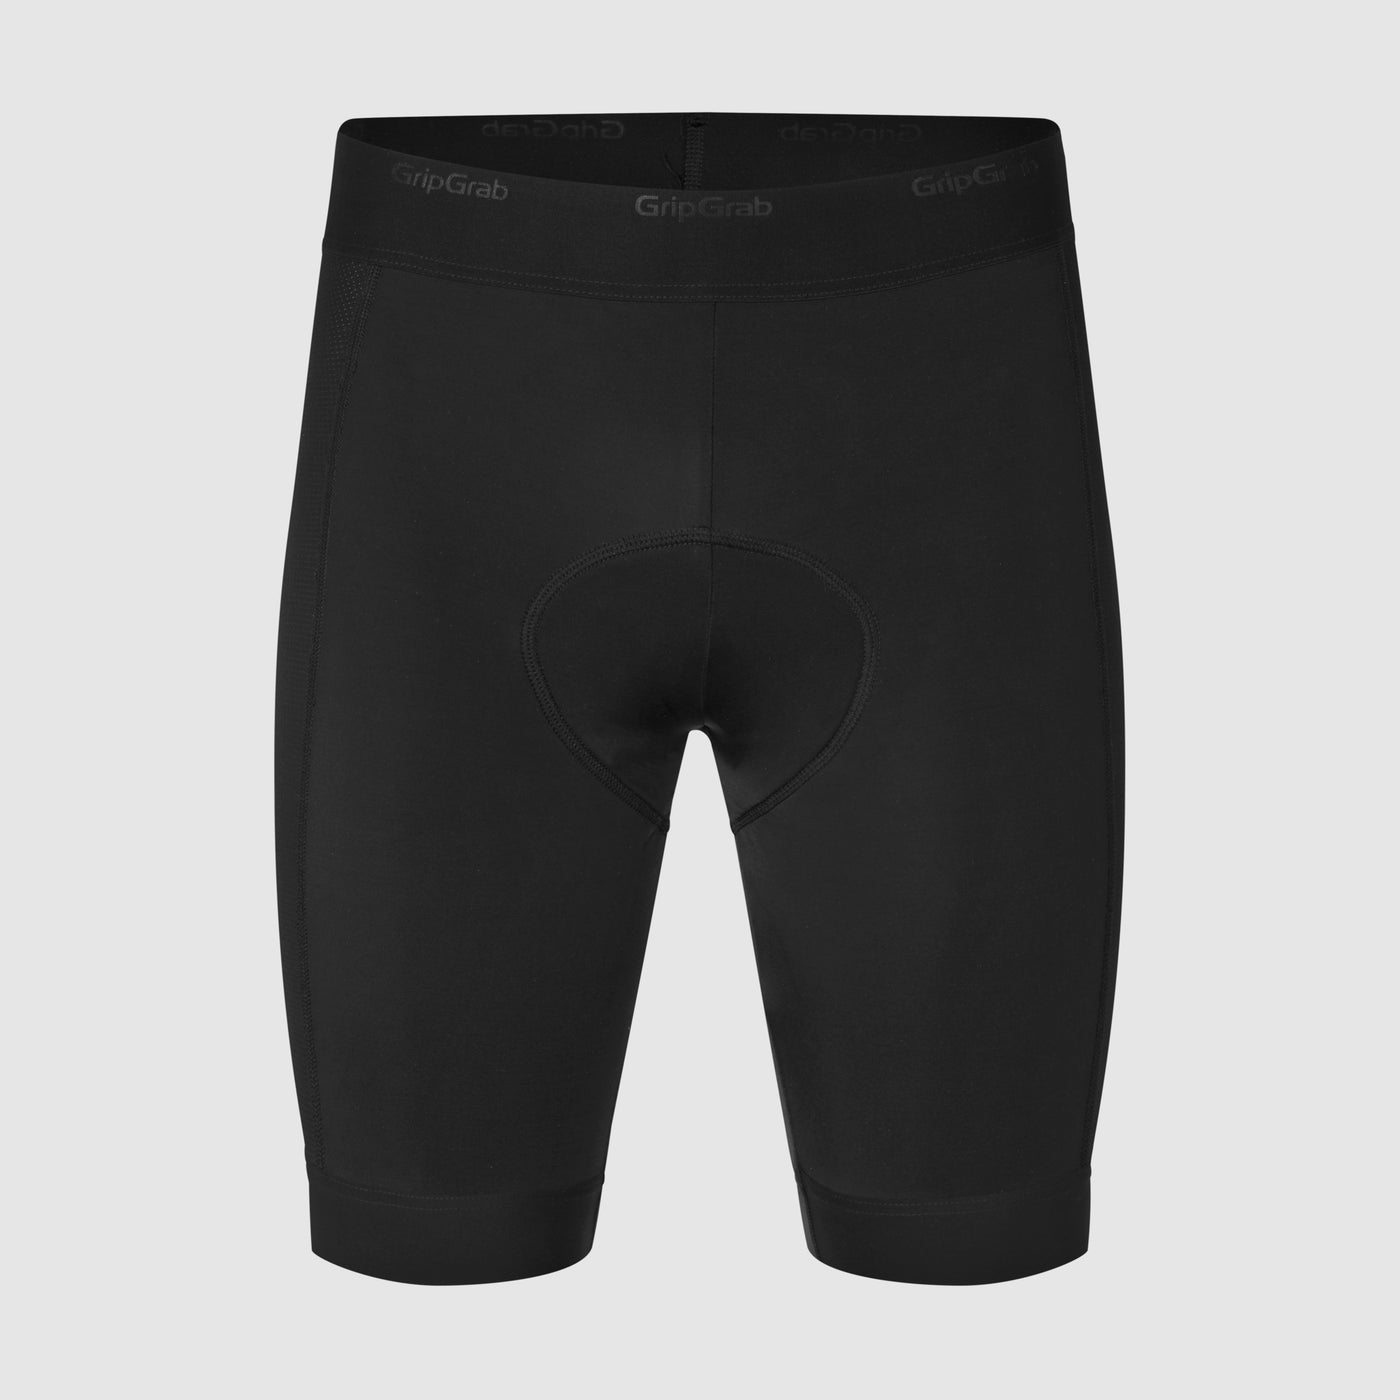 VentiLite Padded Liner Shorts